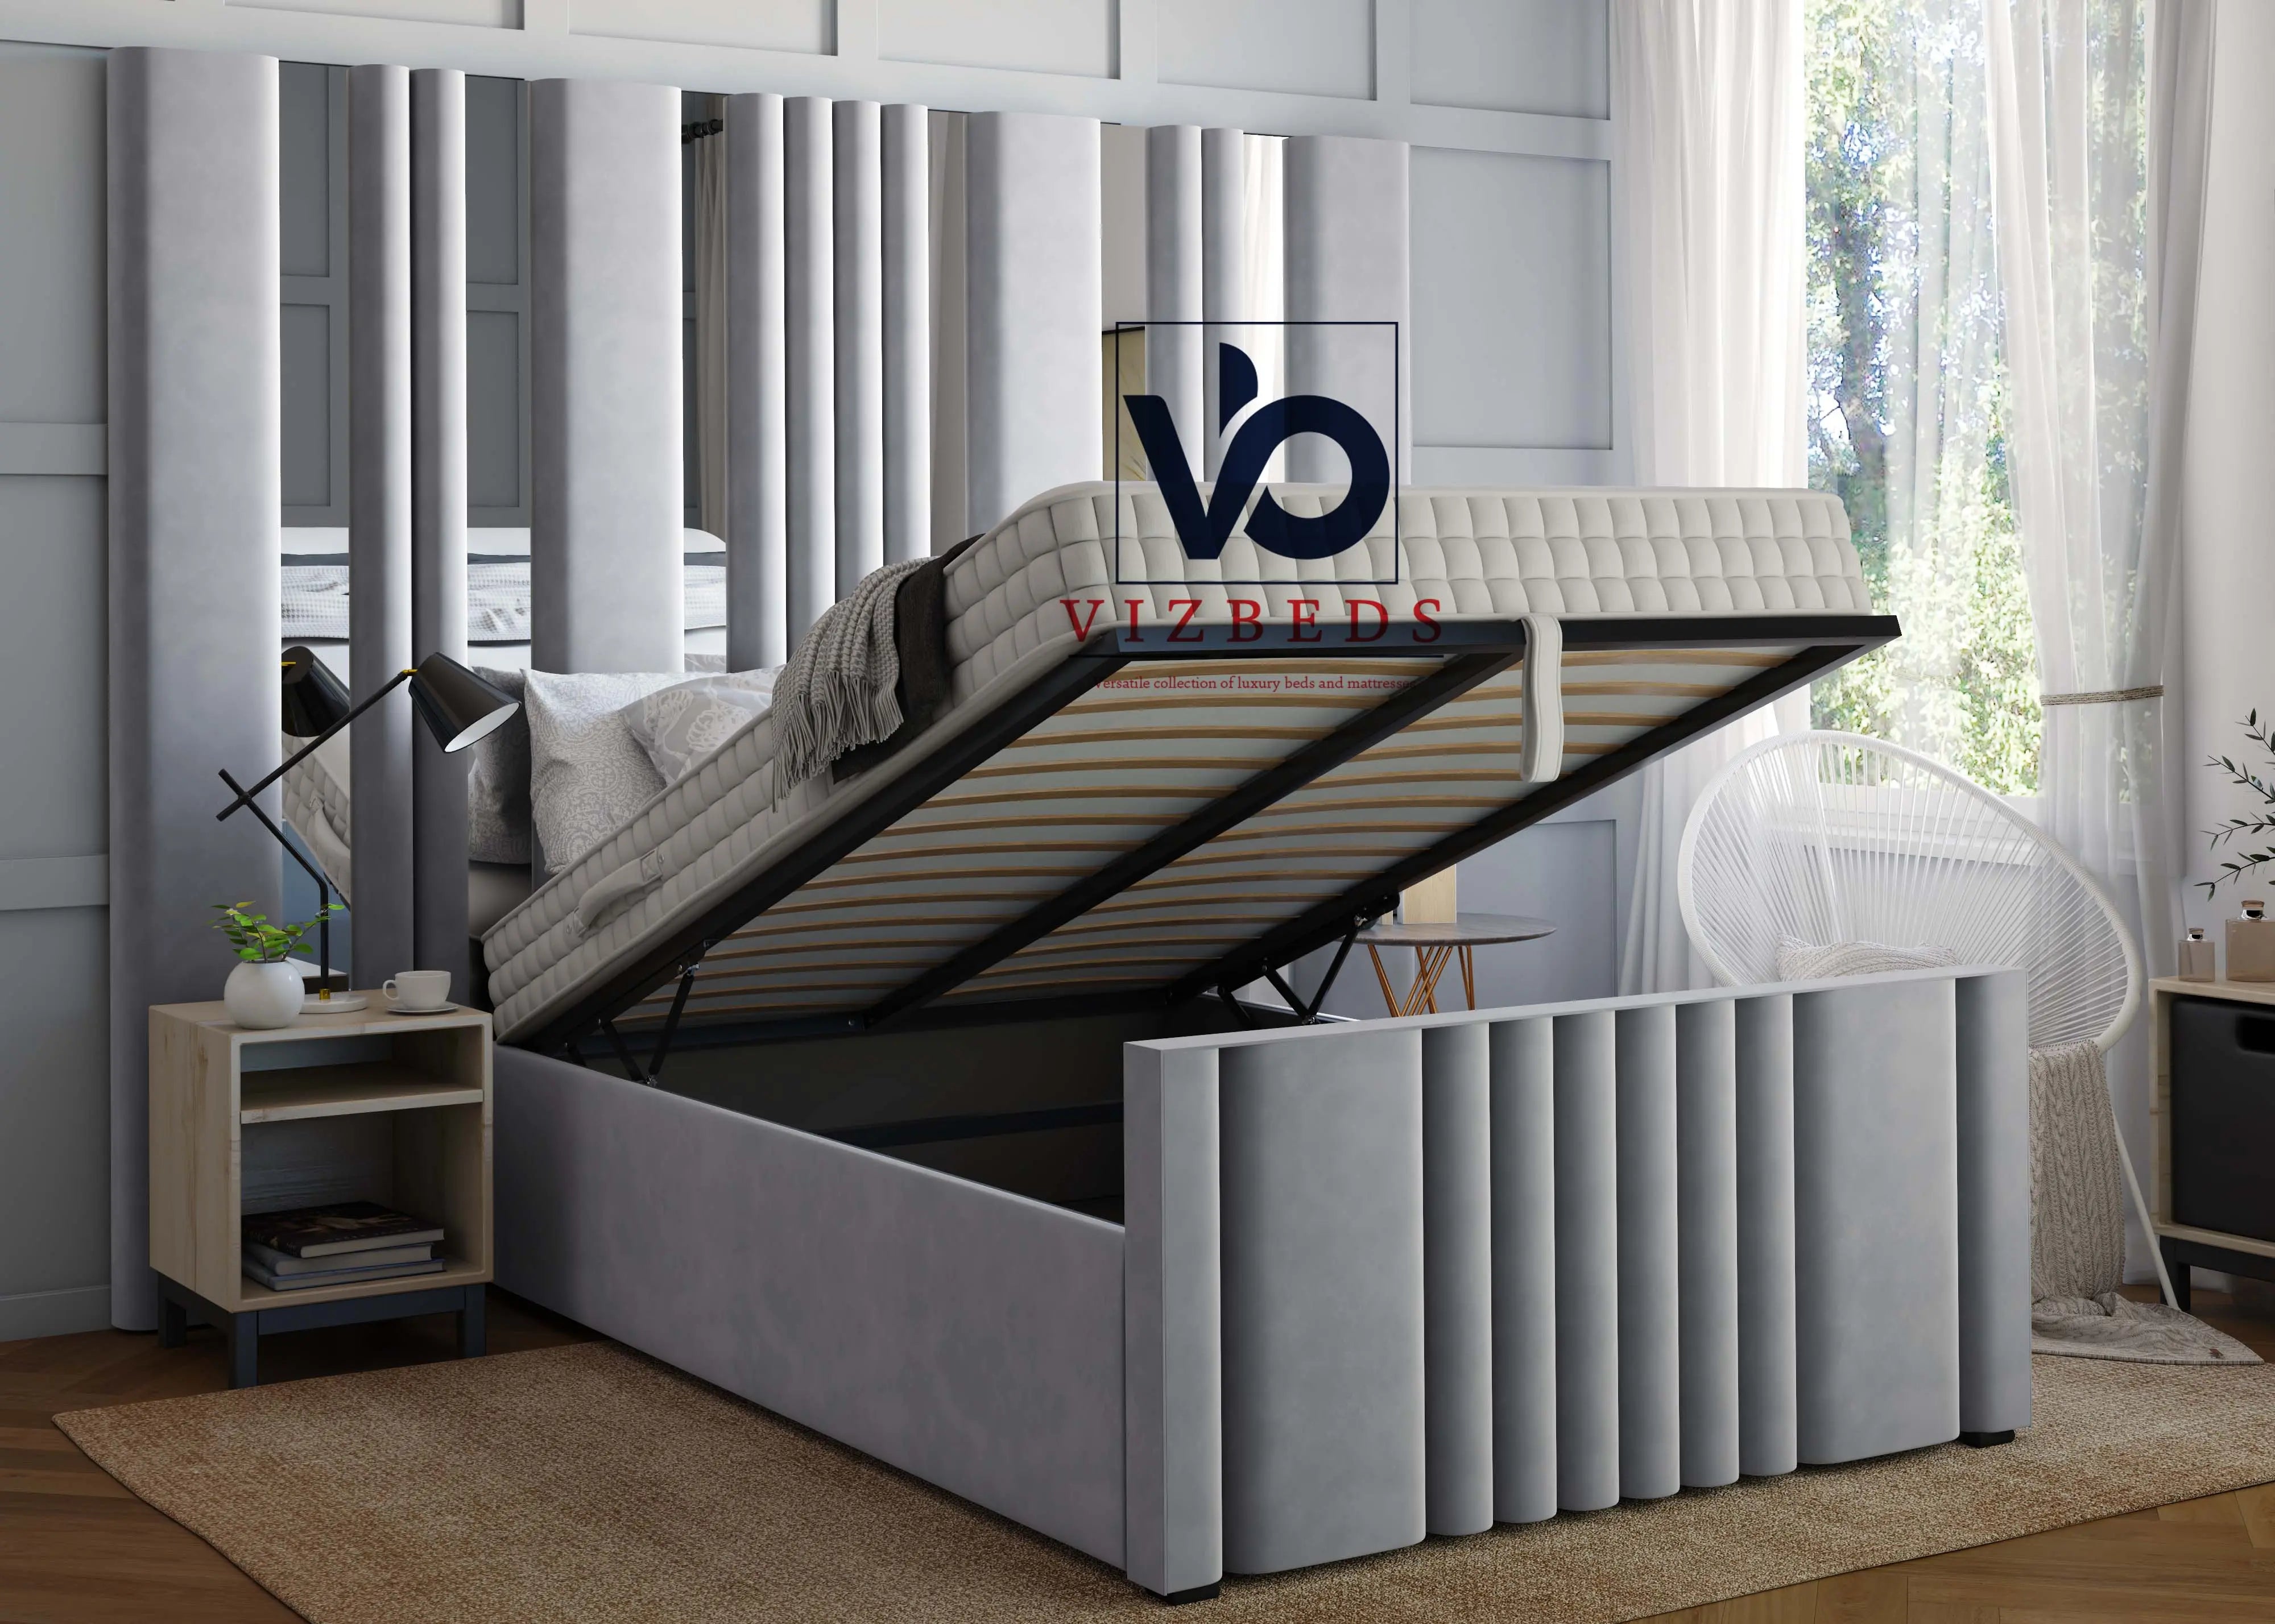 Vegen Luxury Bed With Extended Headboard